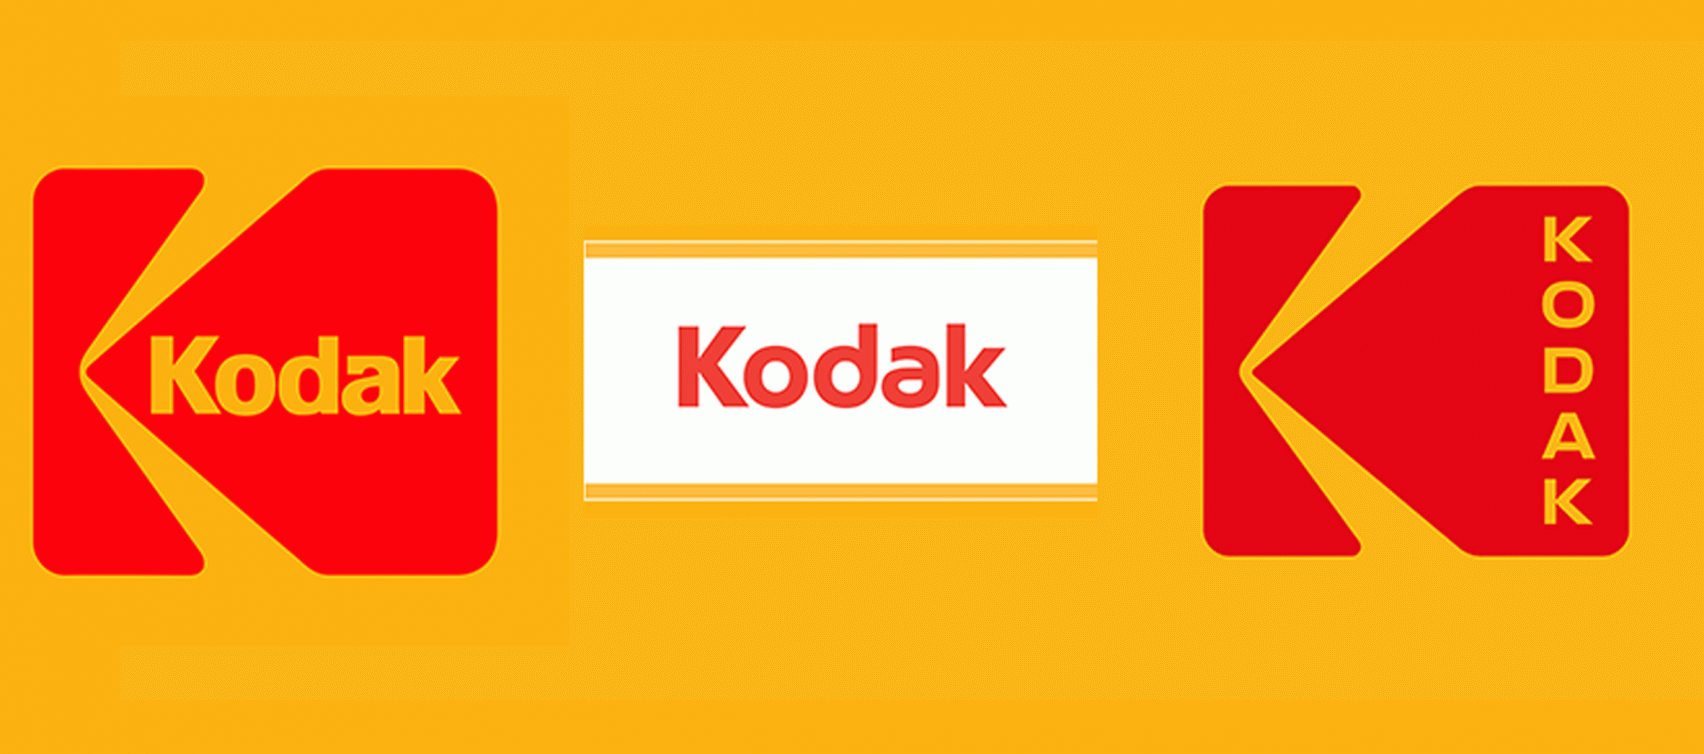 kodak-rebrand-logo-design-news_dezeen_co